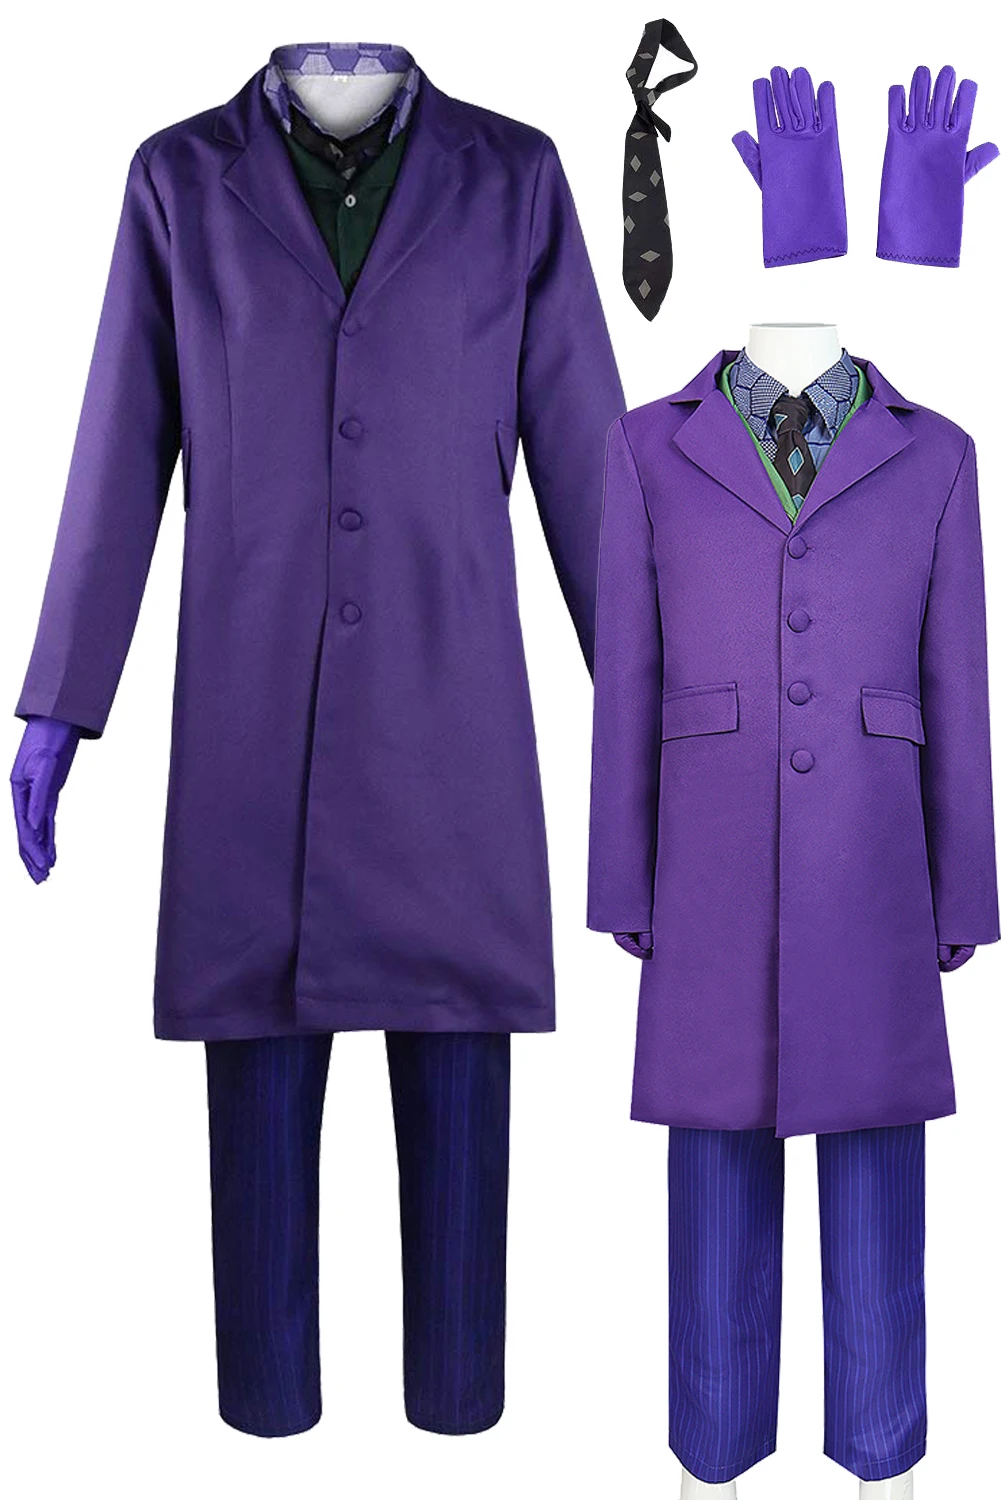 

Joker Cosplay Fantasia Movie Dark Knight Super Villain Disguise Costume Purple Adult Men Kid Boy Fantasy Outfits Halloween Cloth